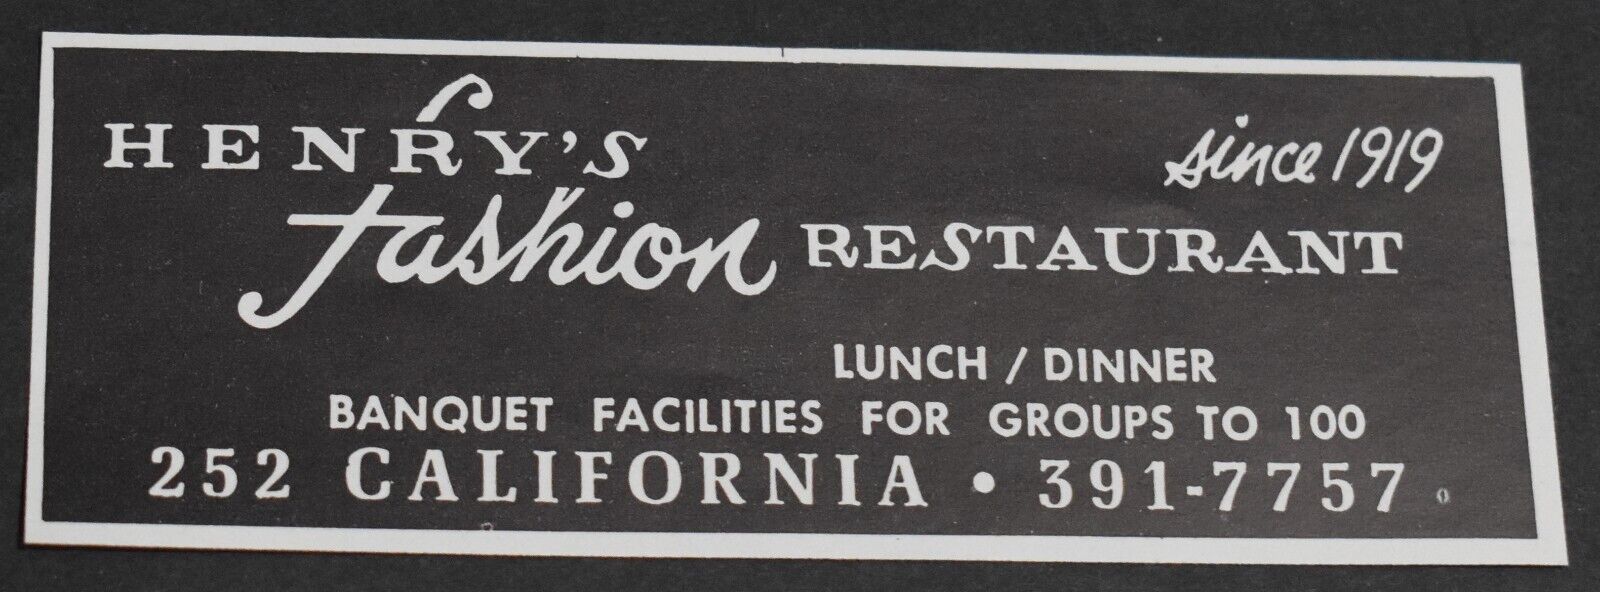 1969 Print Ad San Francisco Henry's Fashion Restaurant 252 California Lunch art